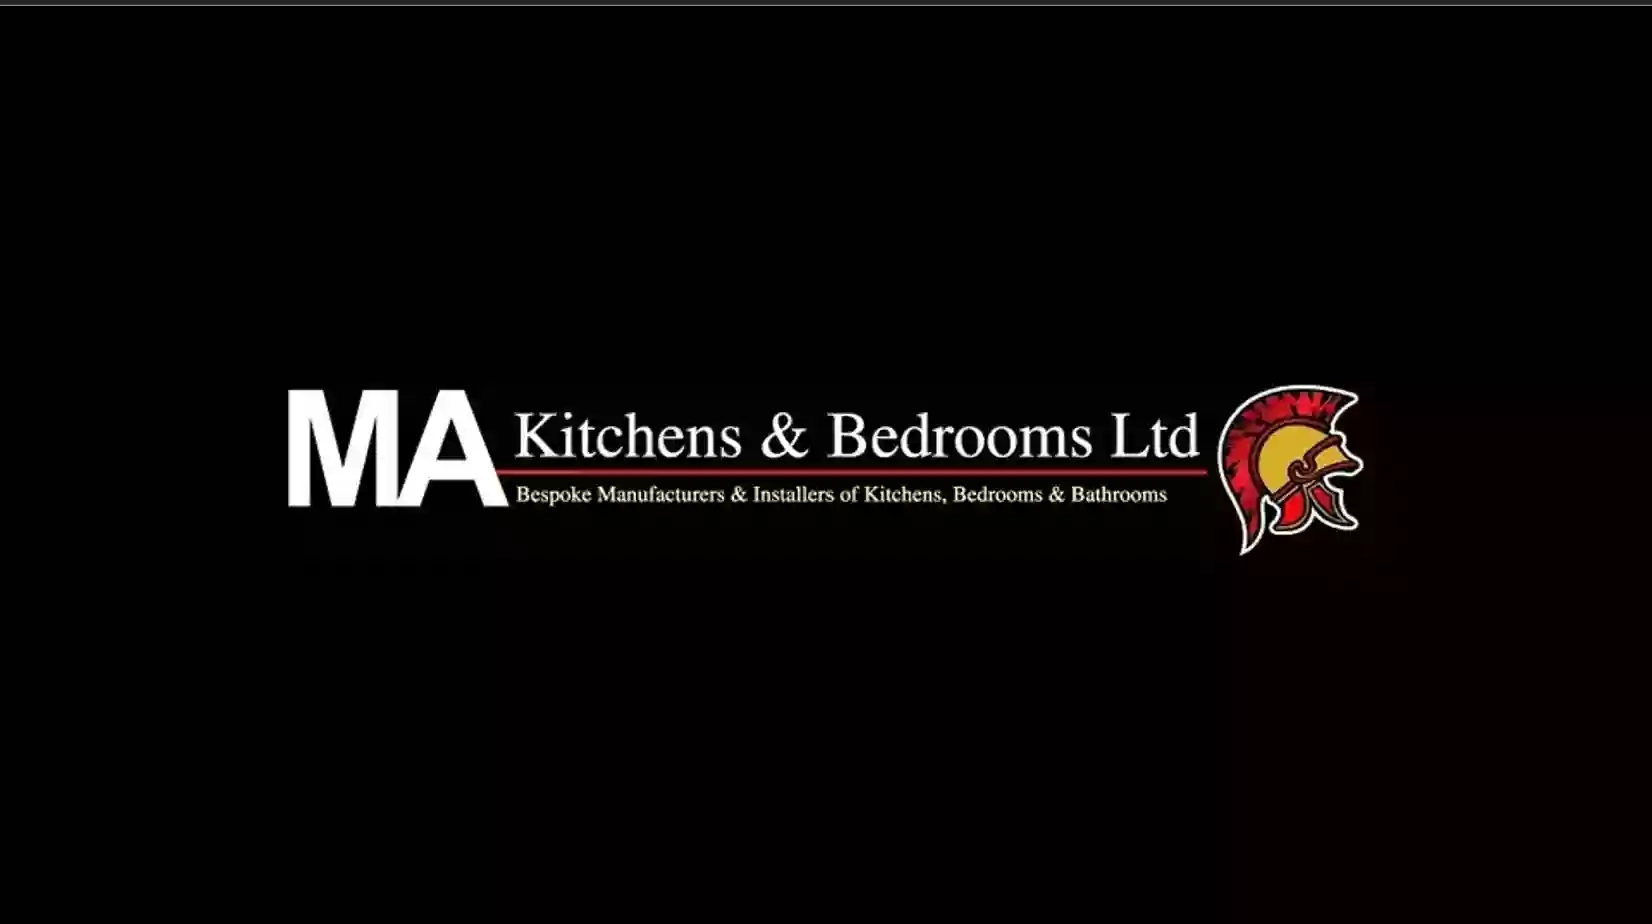 M A Kitchens, Bedrooms & Bathrooms